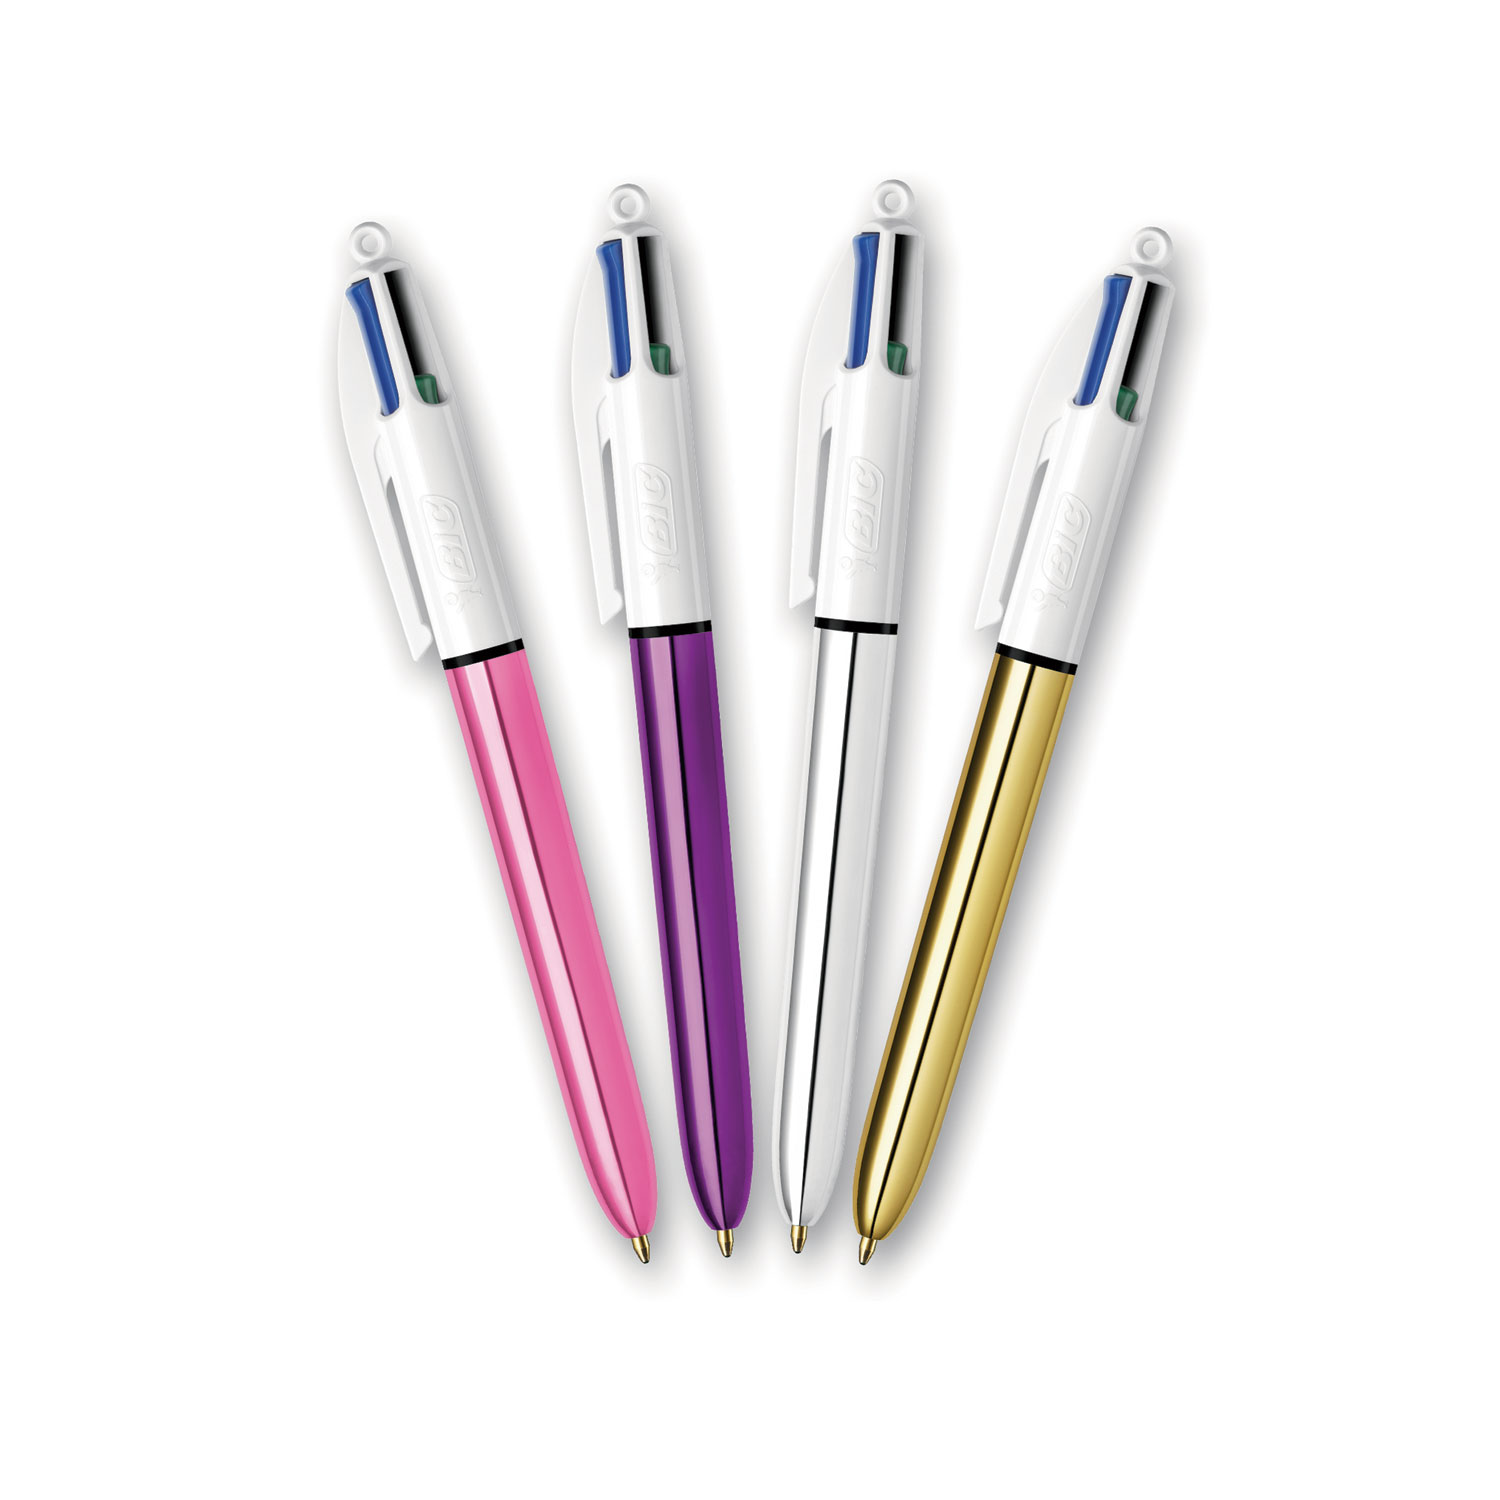  Bic 4 Colours Rose Gold Pen, Multi Coloured Pens All